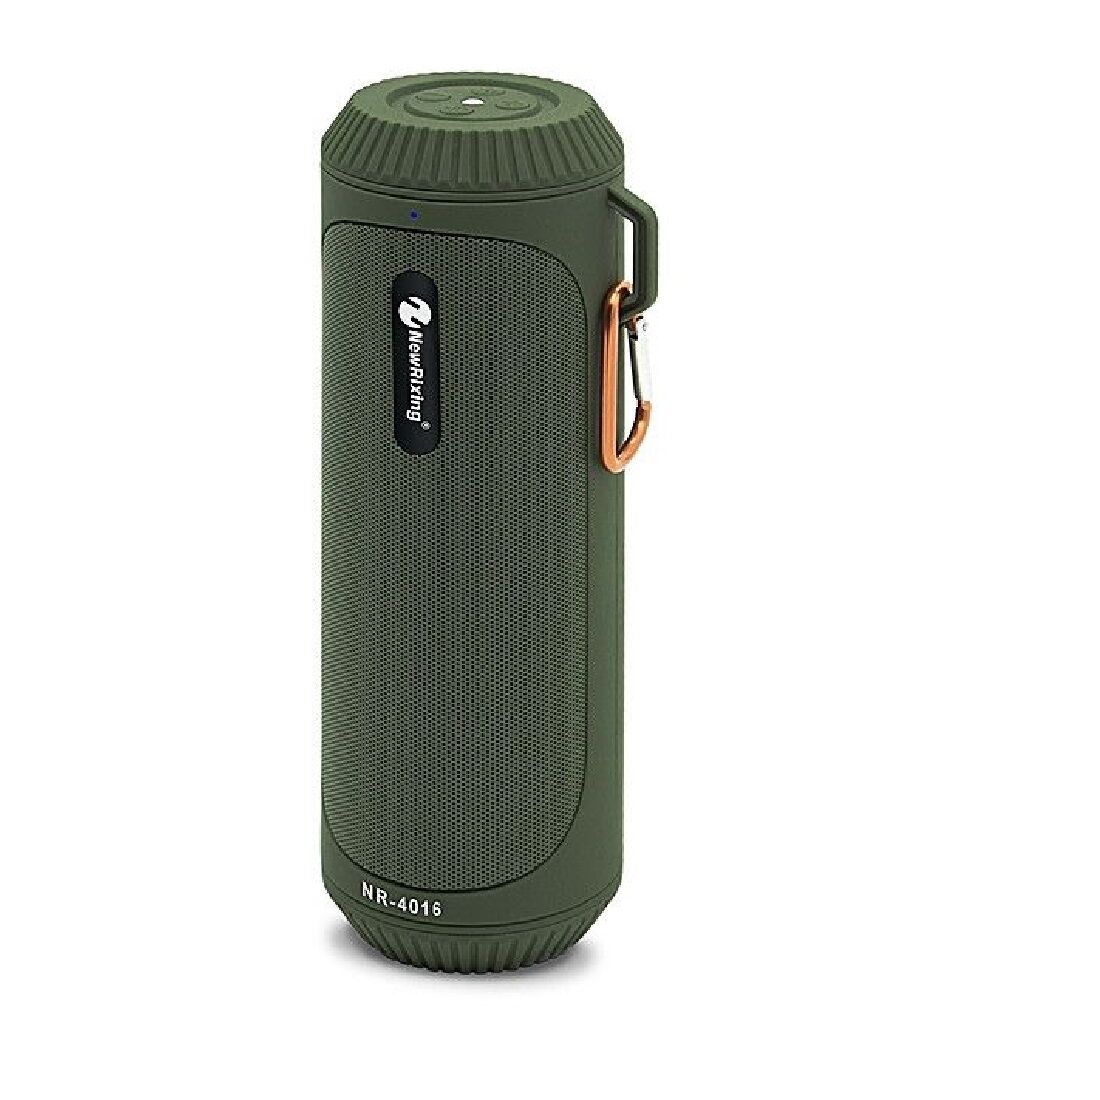 Boxa portabila Wireless cu Lanterna, NR-4016 cu Bluetooth, TF/SD Card, Aux-in, Radio FM, Verde